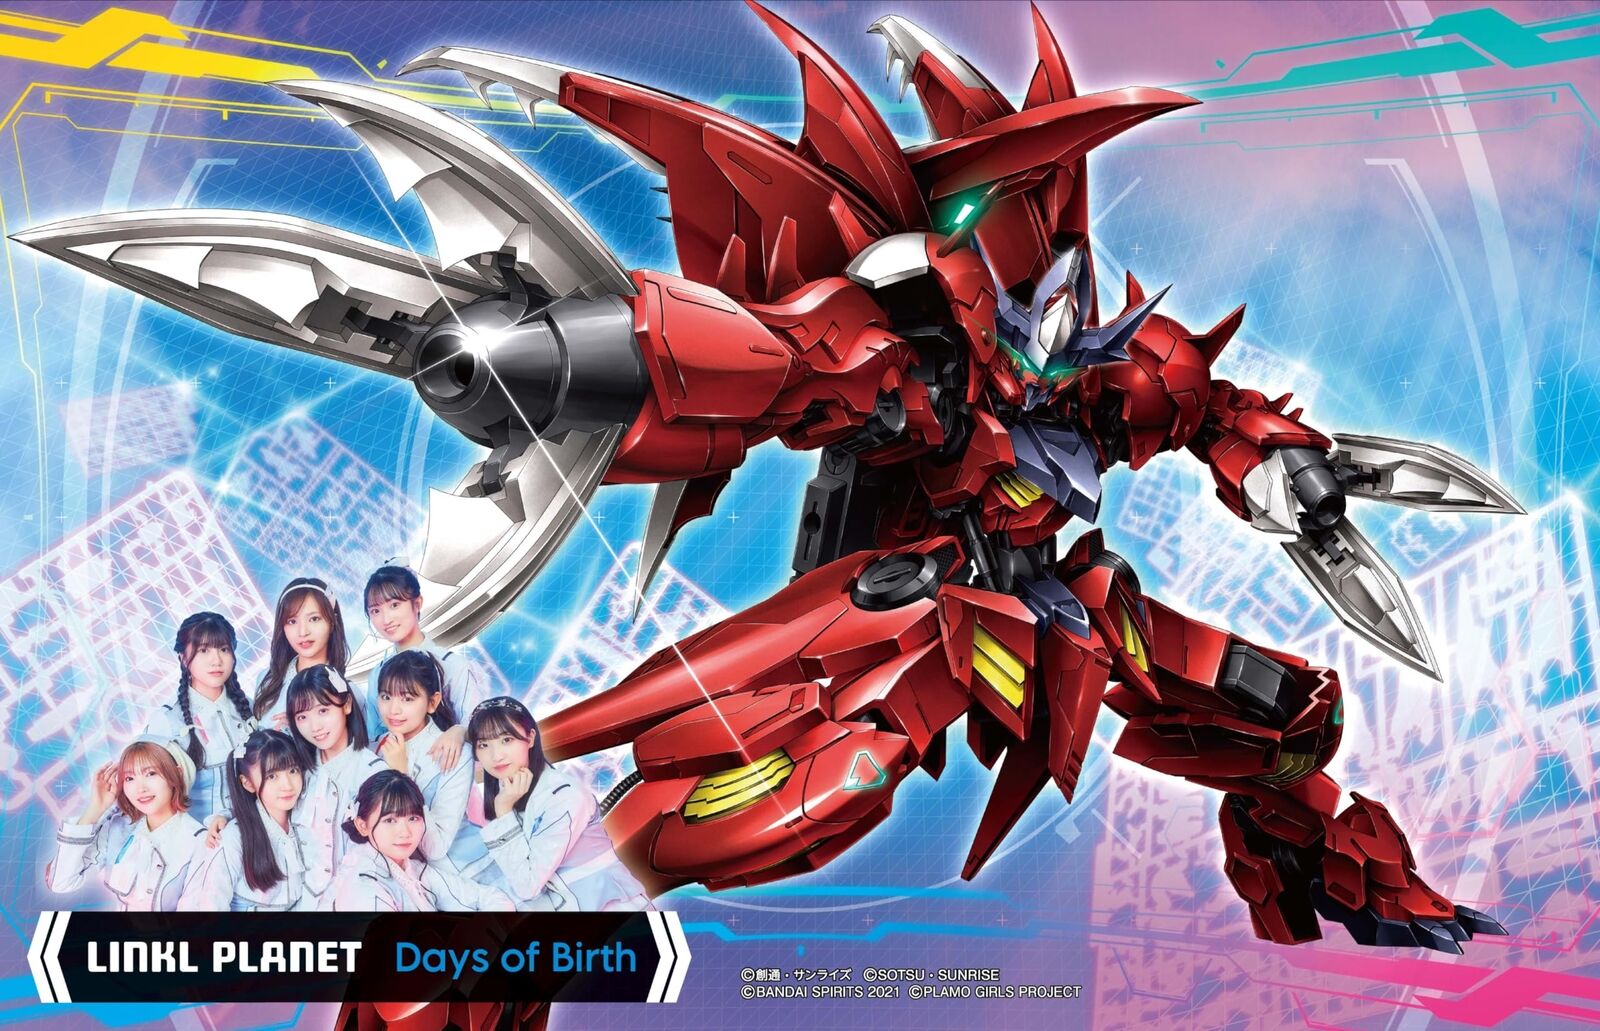 LINKL PLANET CD [Days of Birth] + Gundam Amazing Barbatos Lupus metallic  New